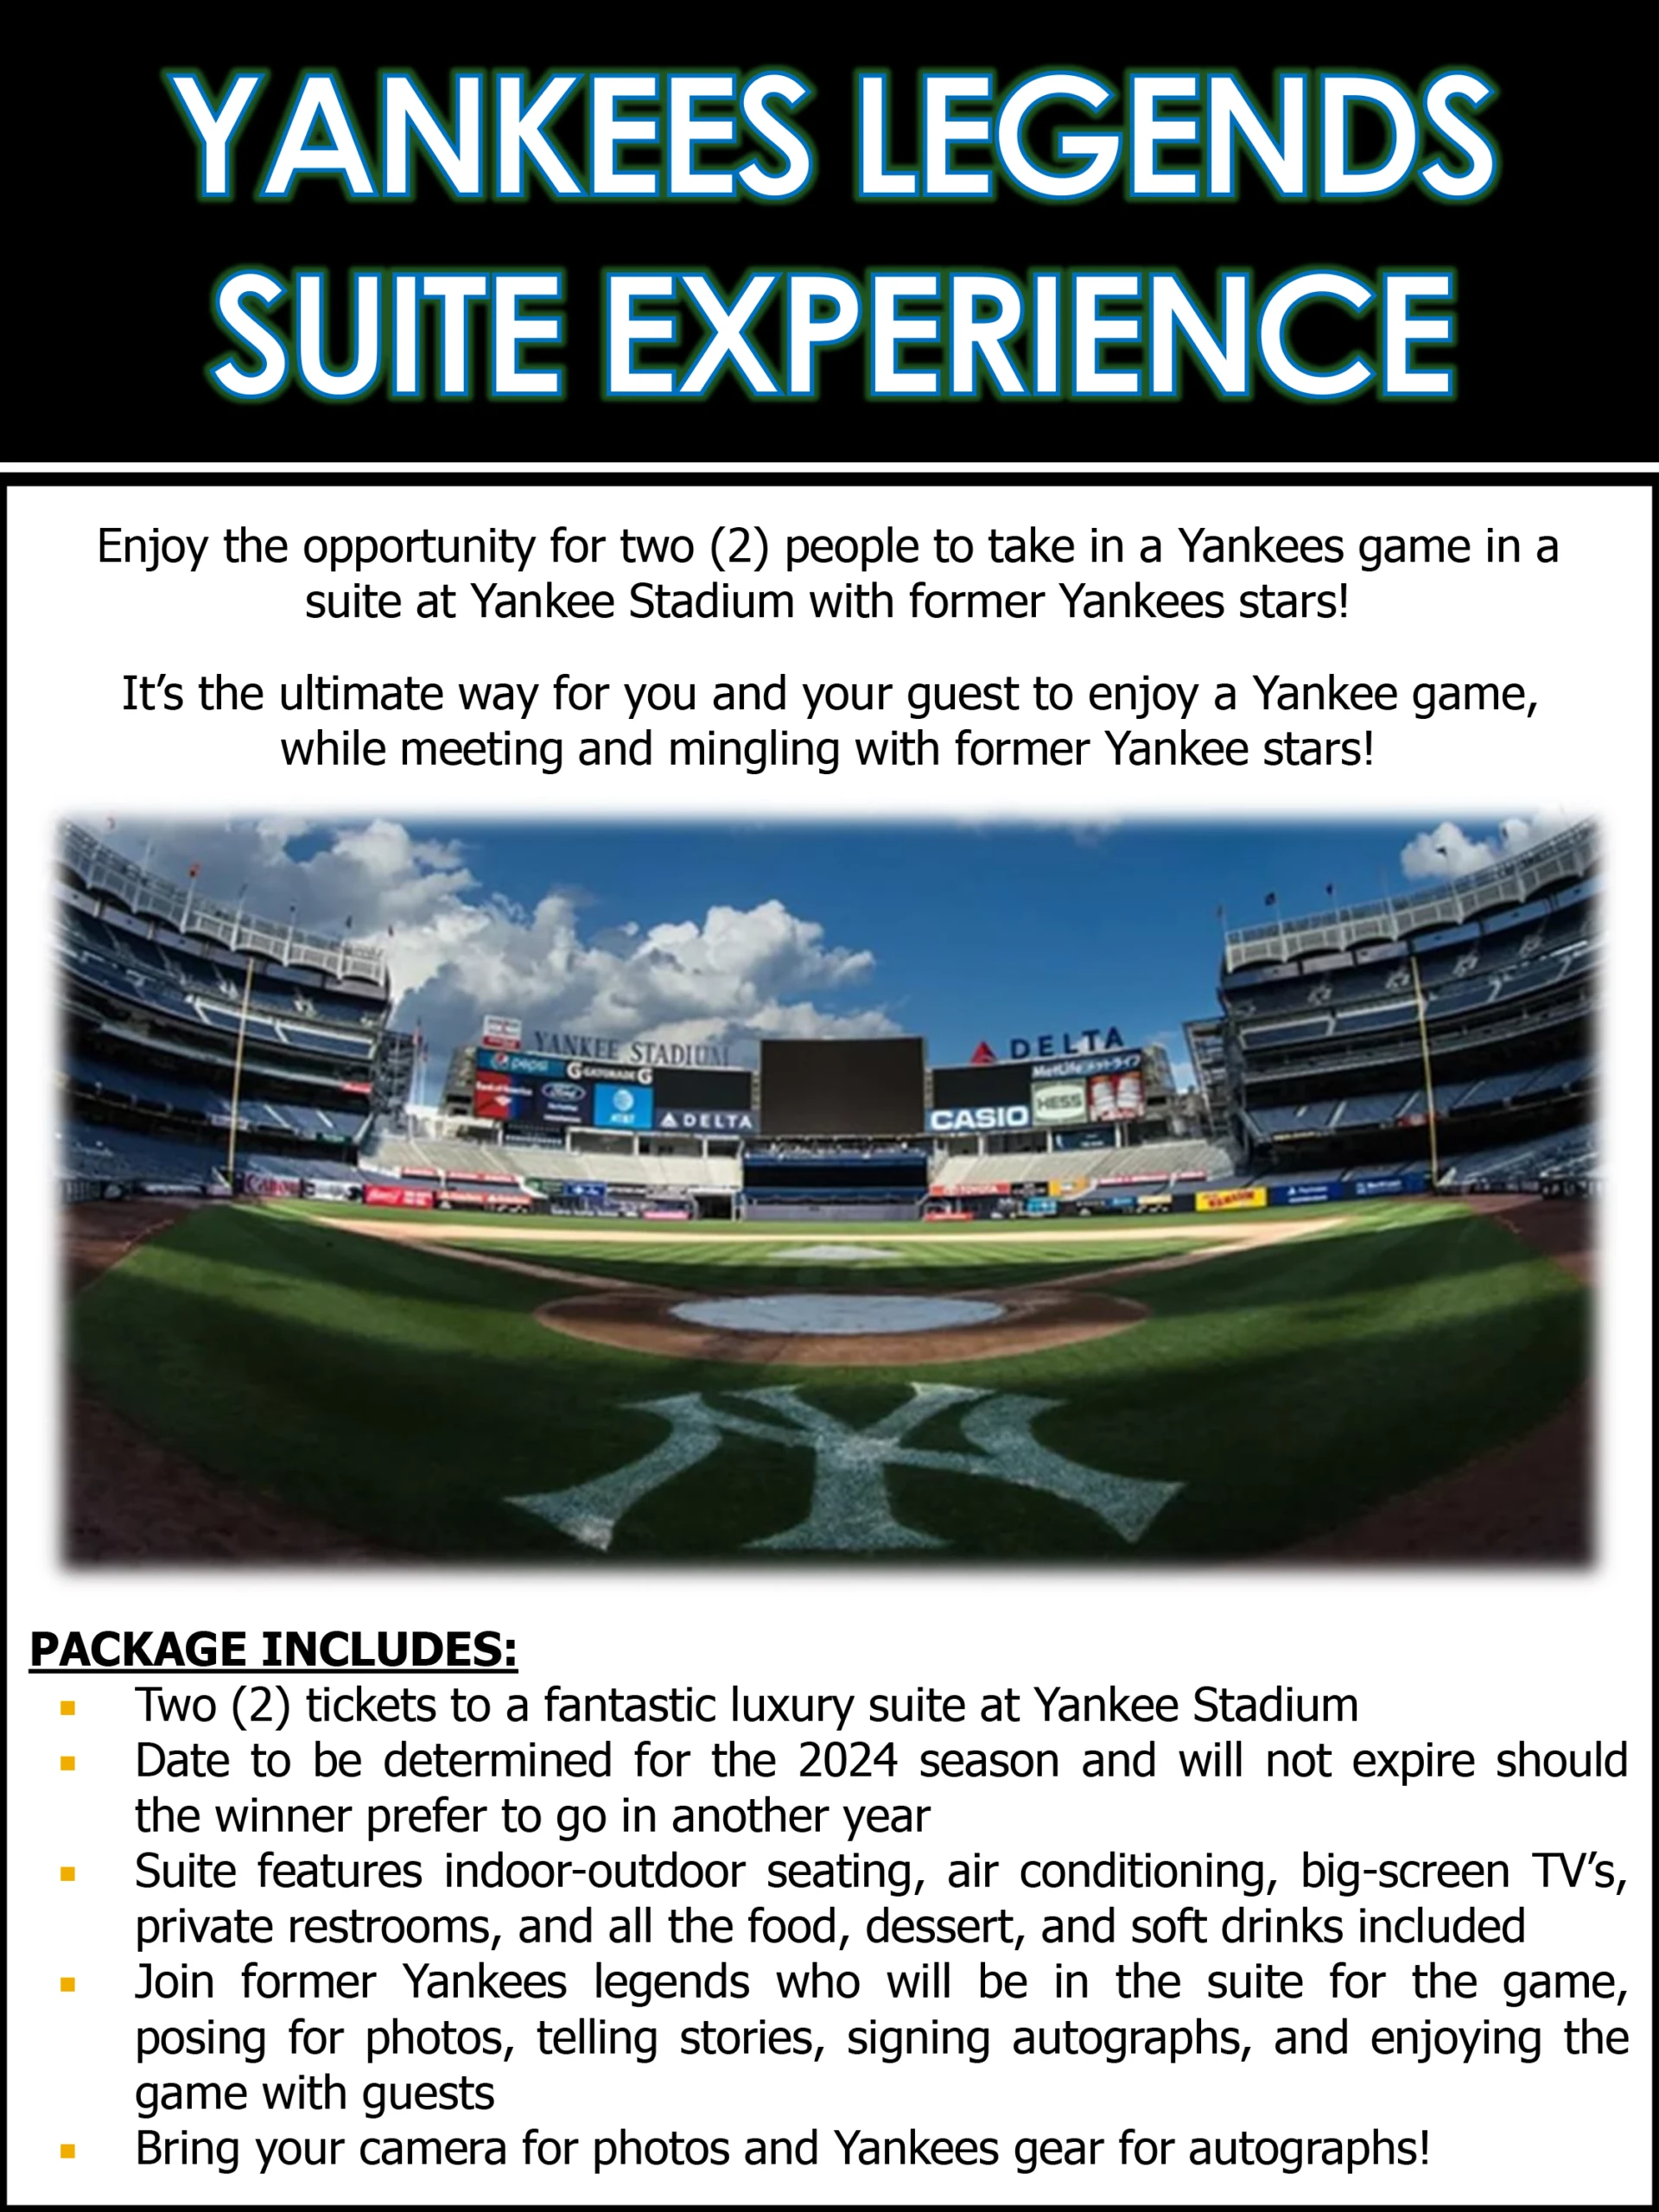 Yankees Legends Suite Experience